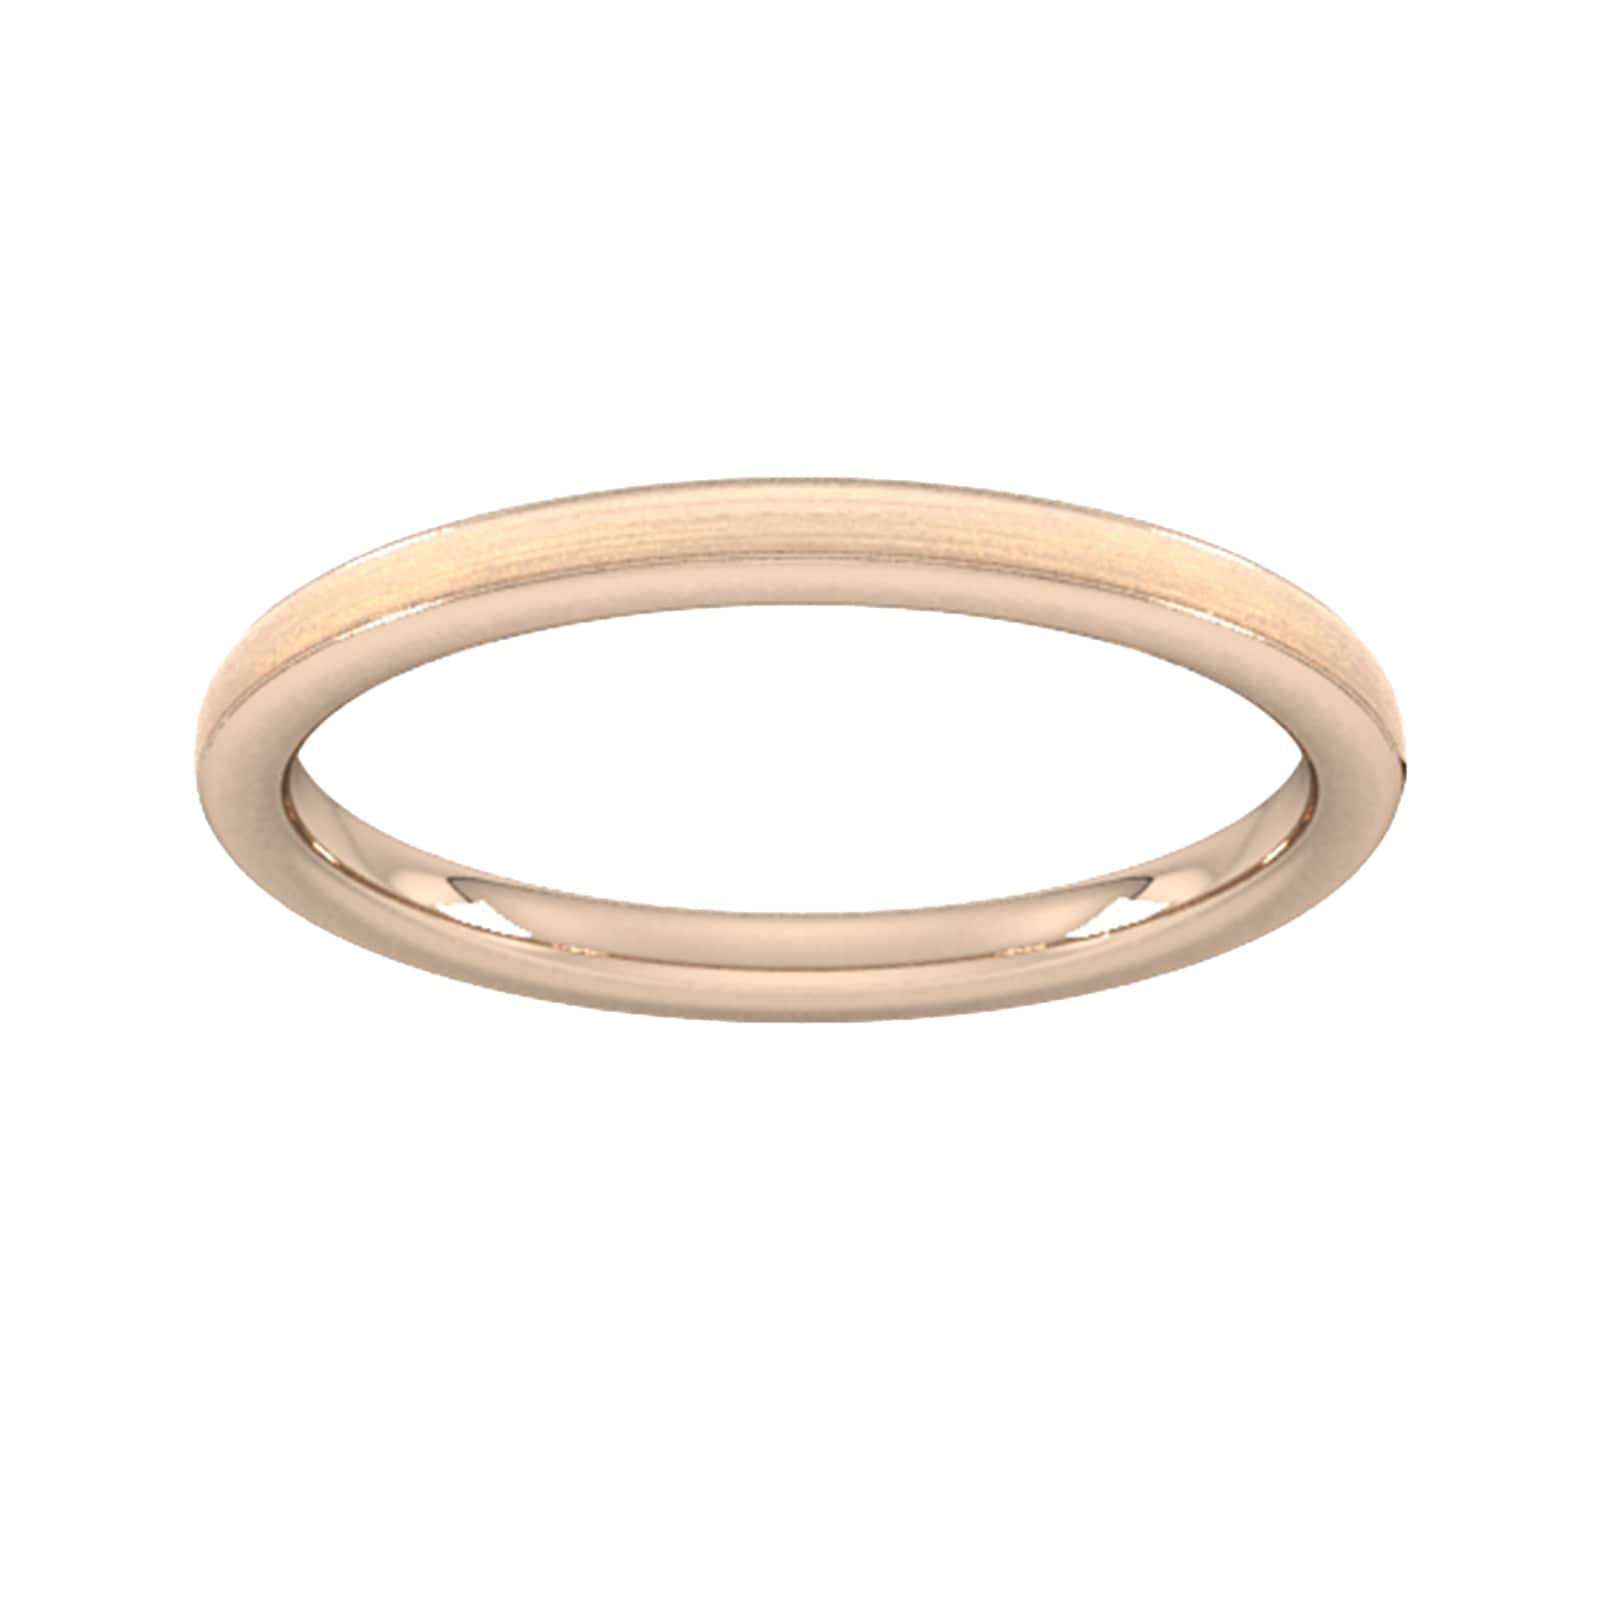 2mm Slight Court Heavy Matt Centre With Grooves Wedding Ring In 18 Carat Rose Gold - Ring Size J